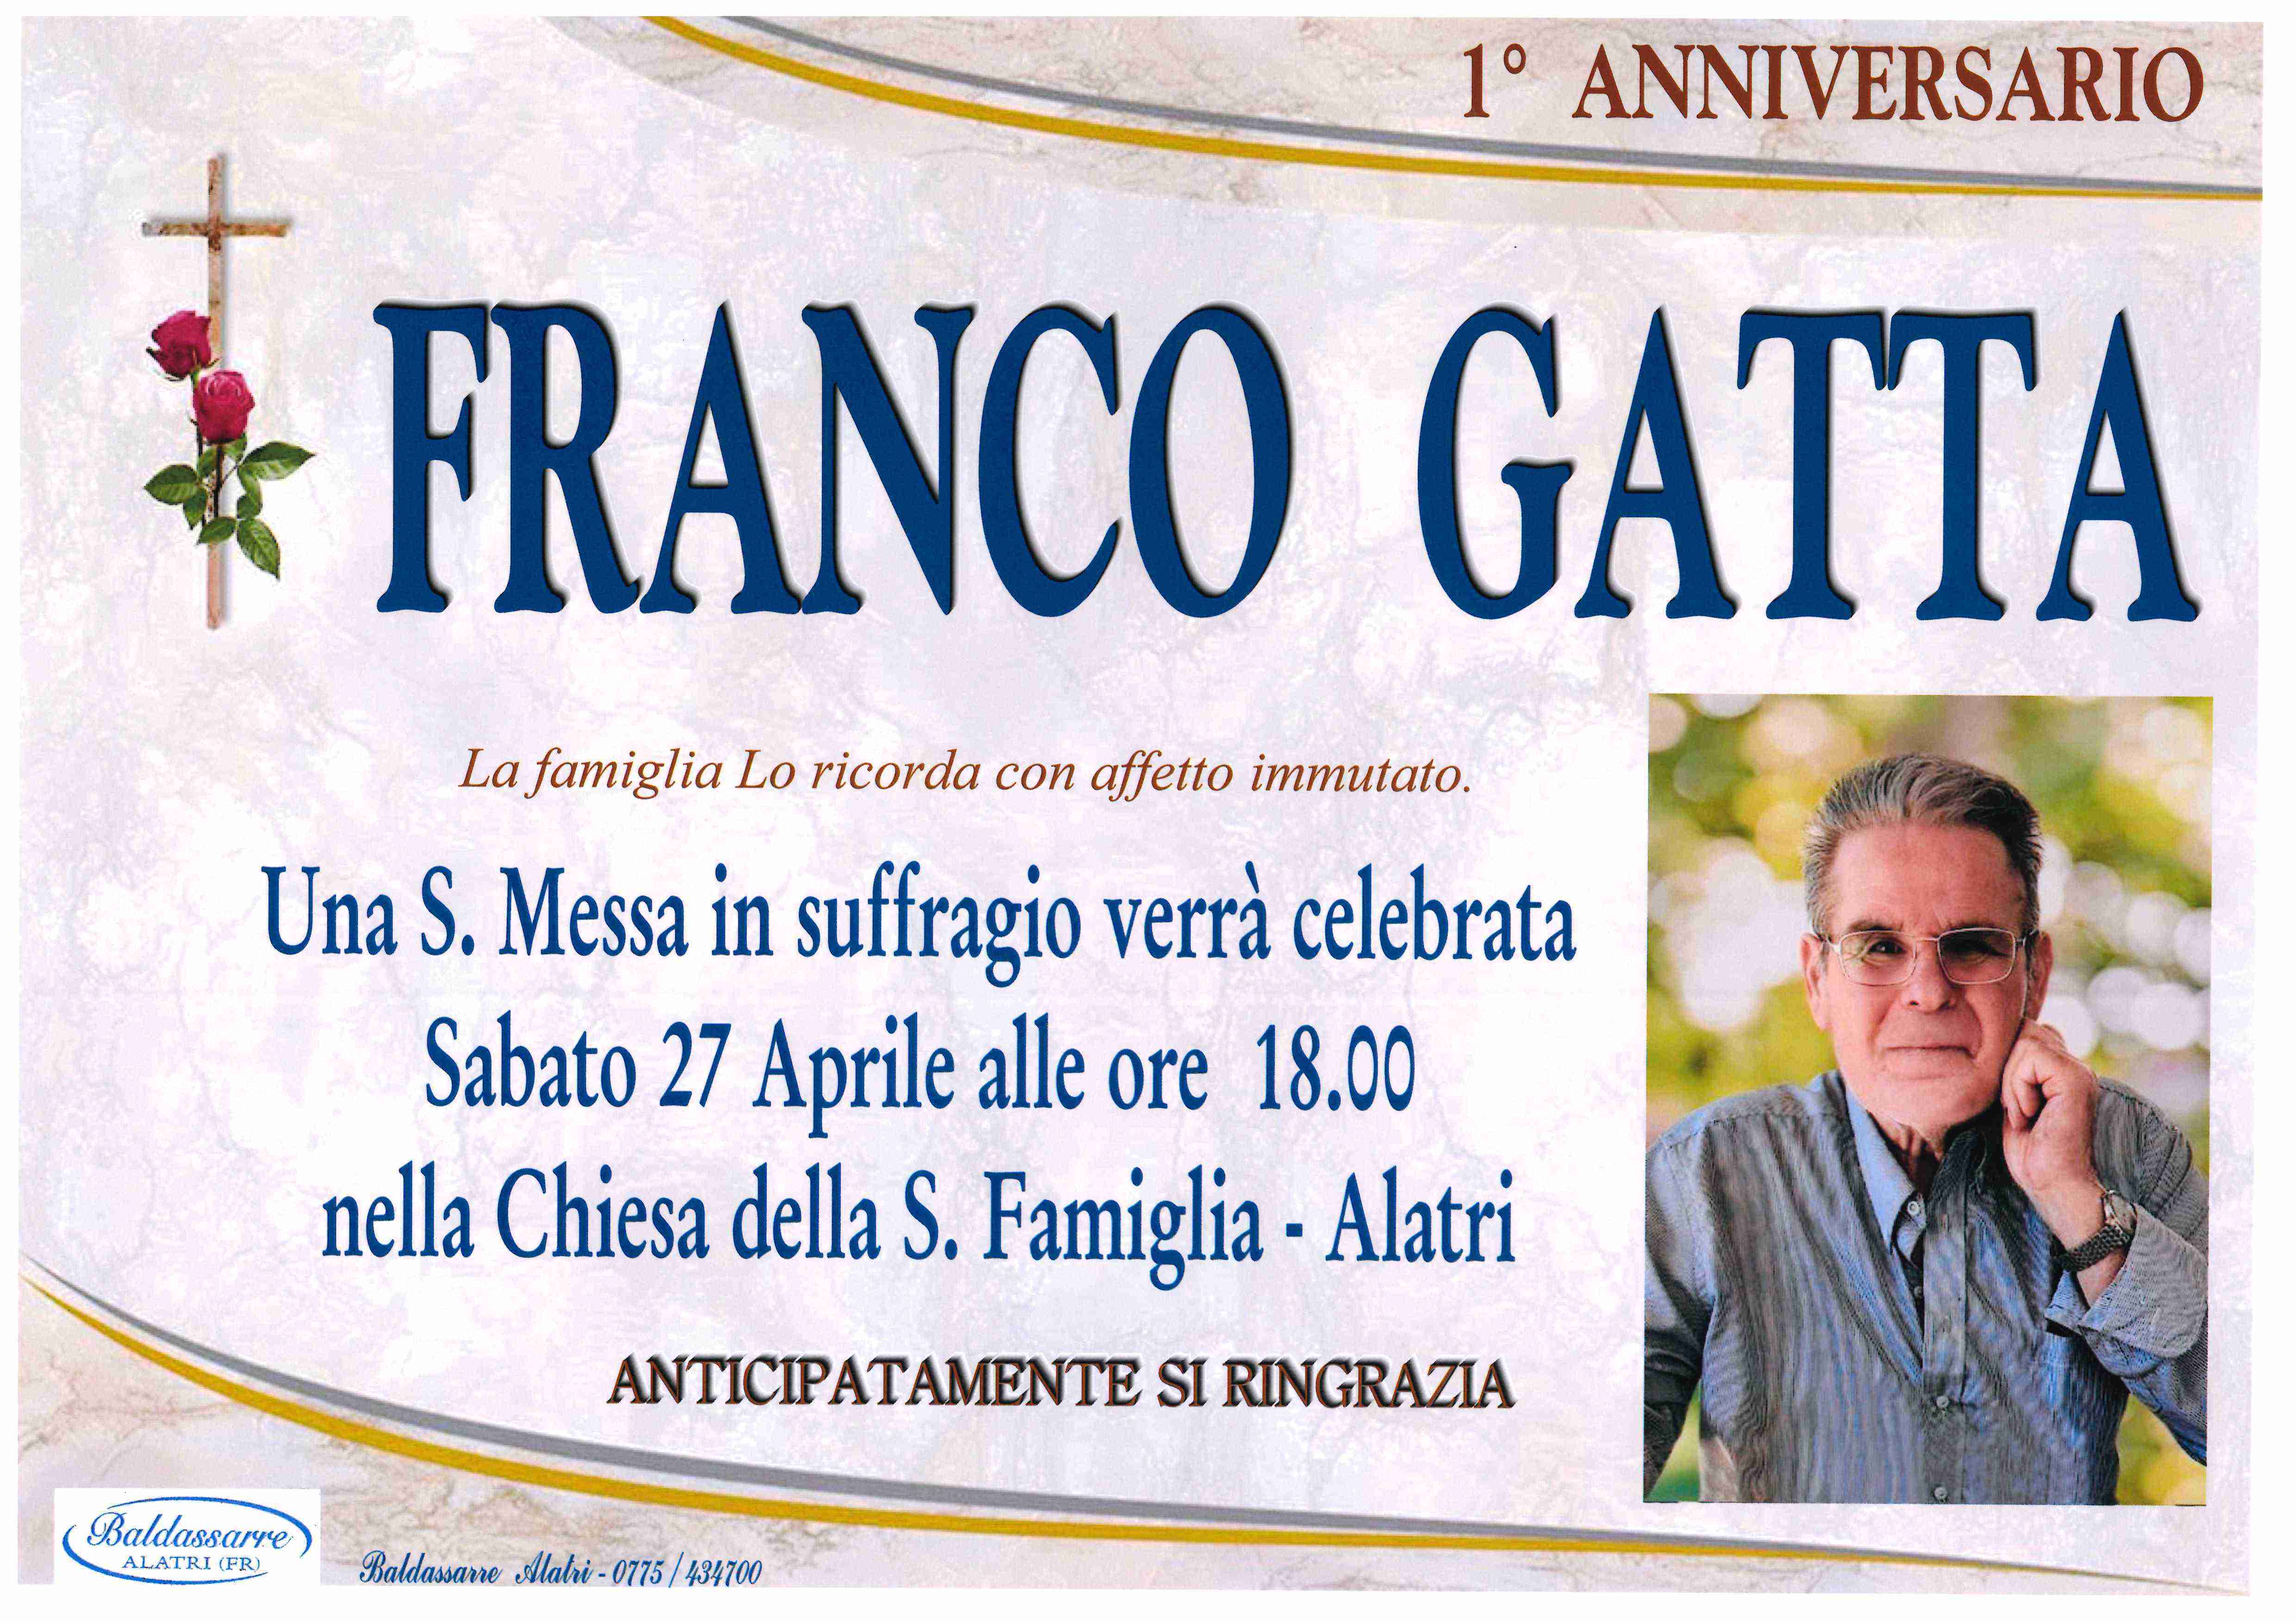 Franco Gatta